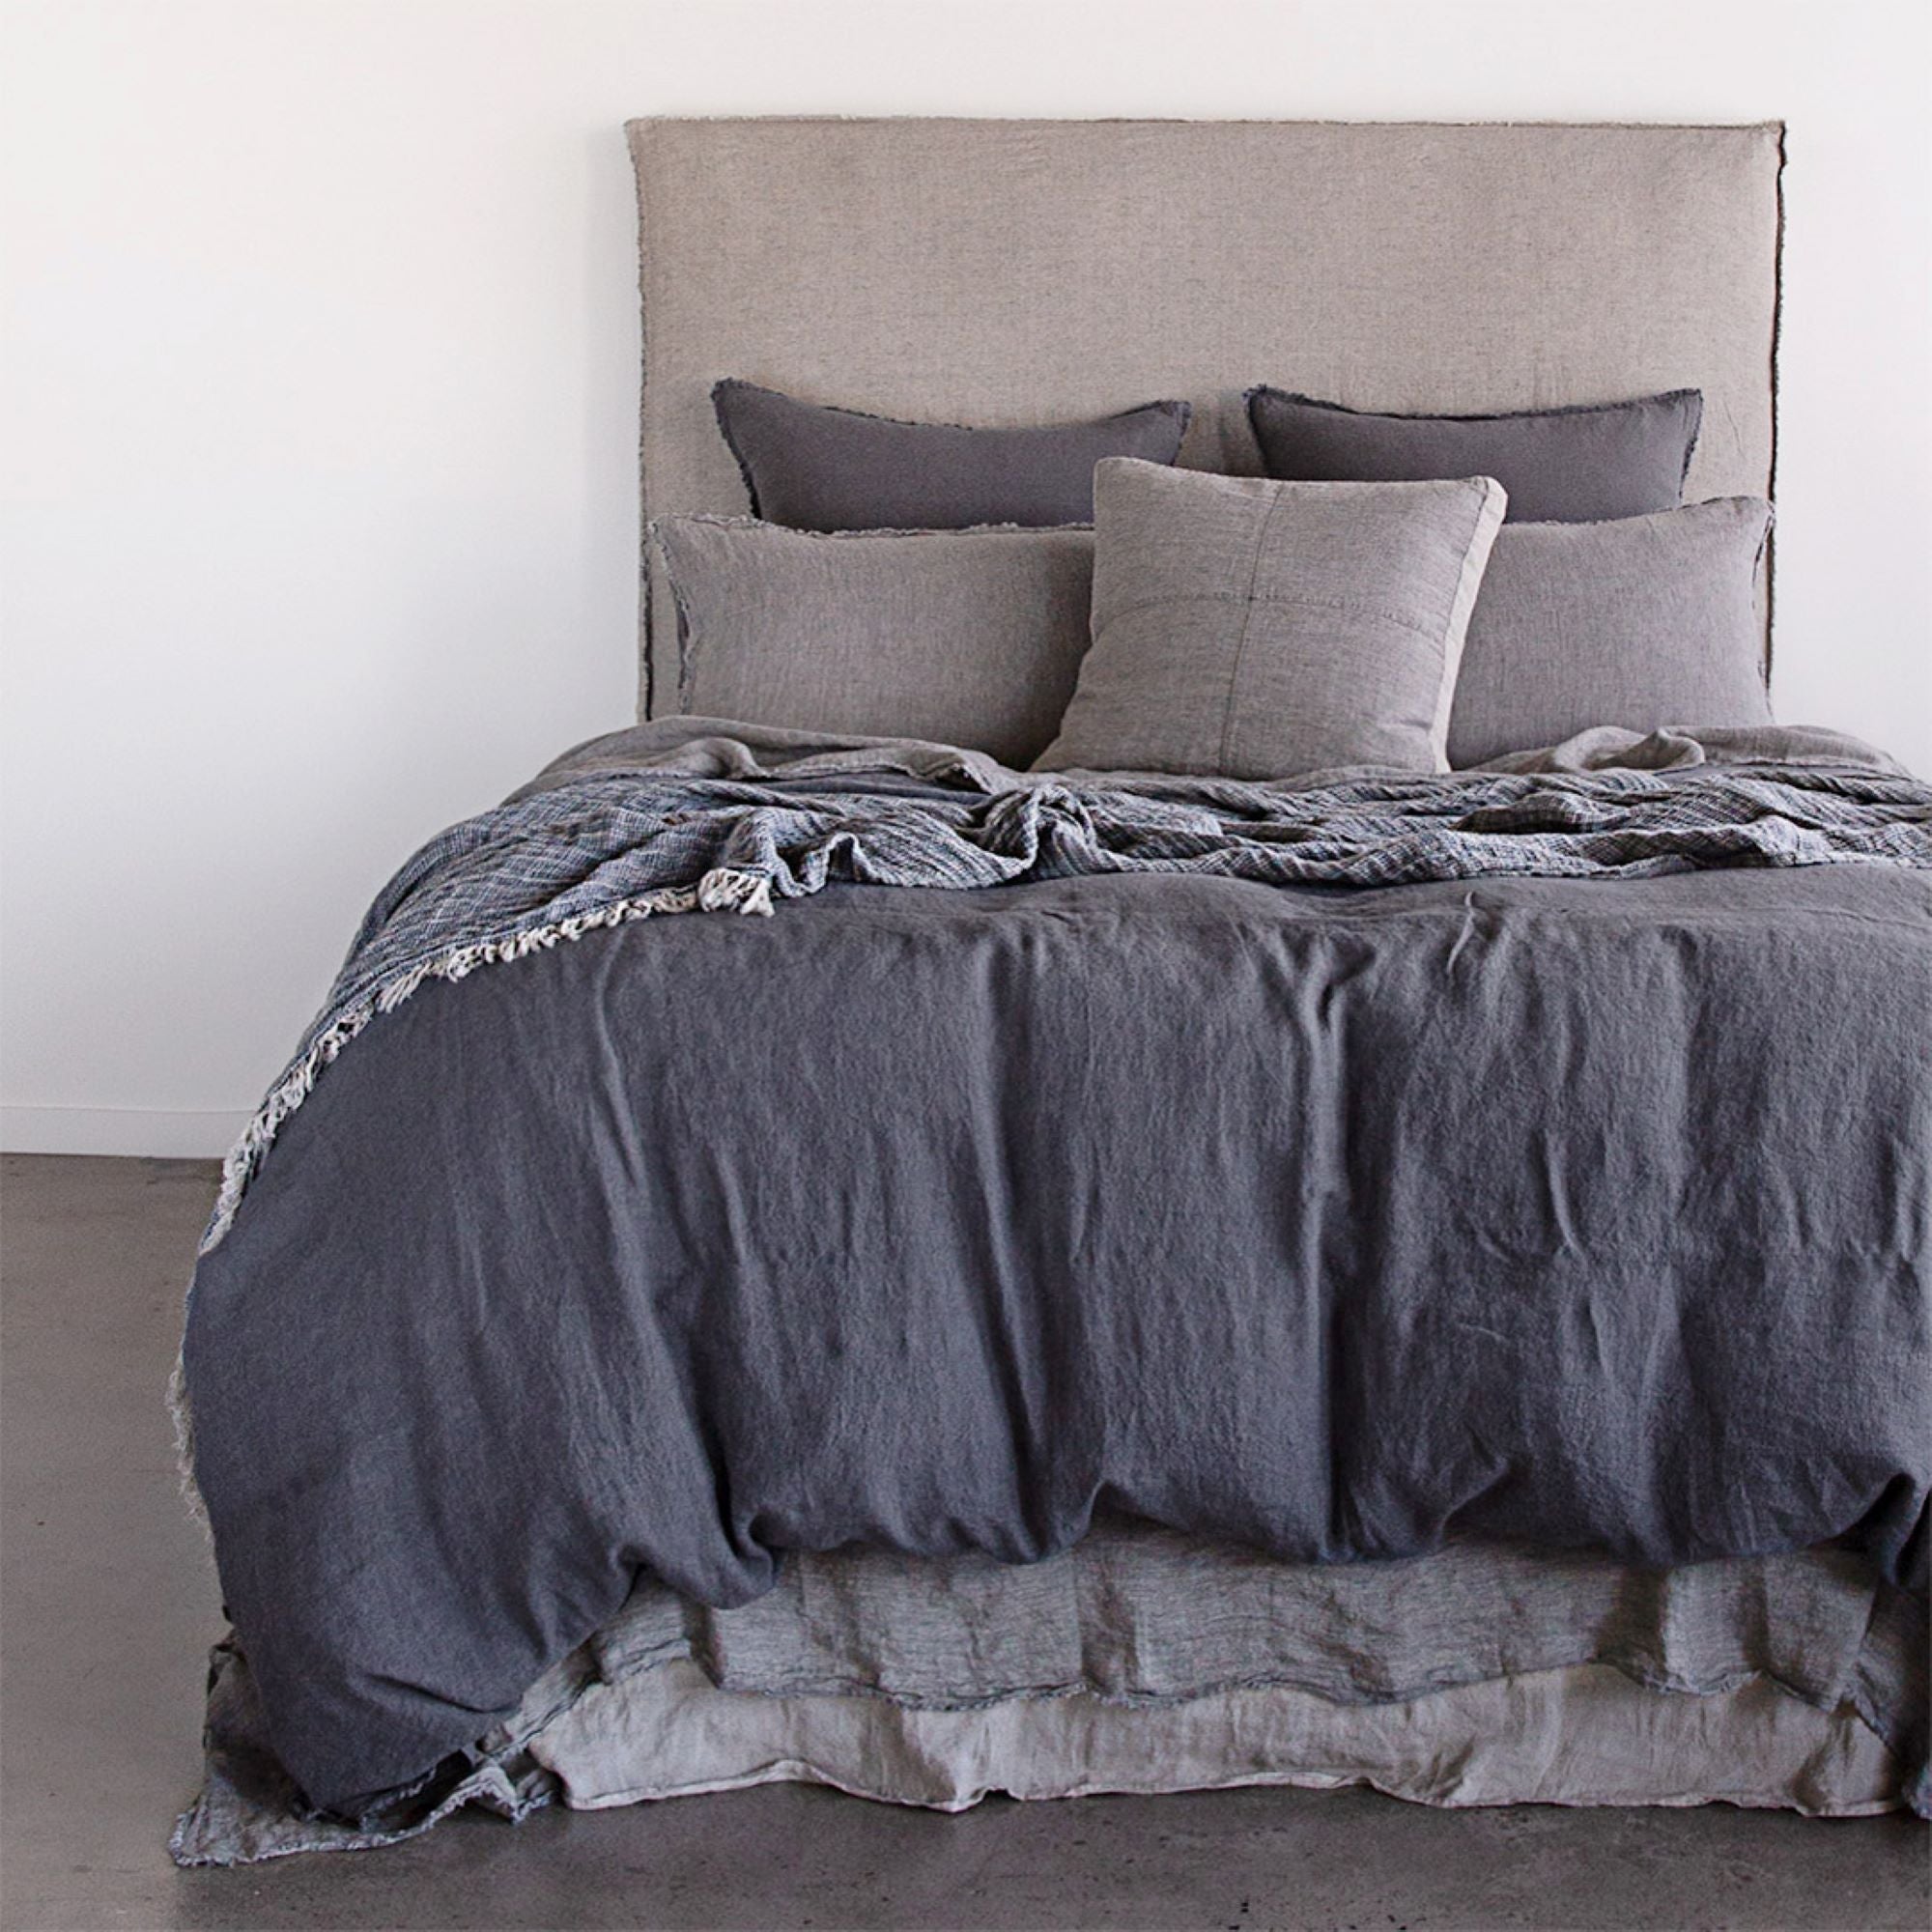 Linen Bedhead & Cover | Sandy Grey | Hale Mercantile Co.